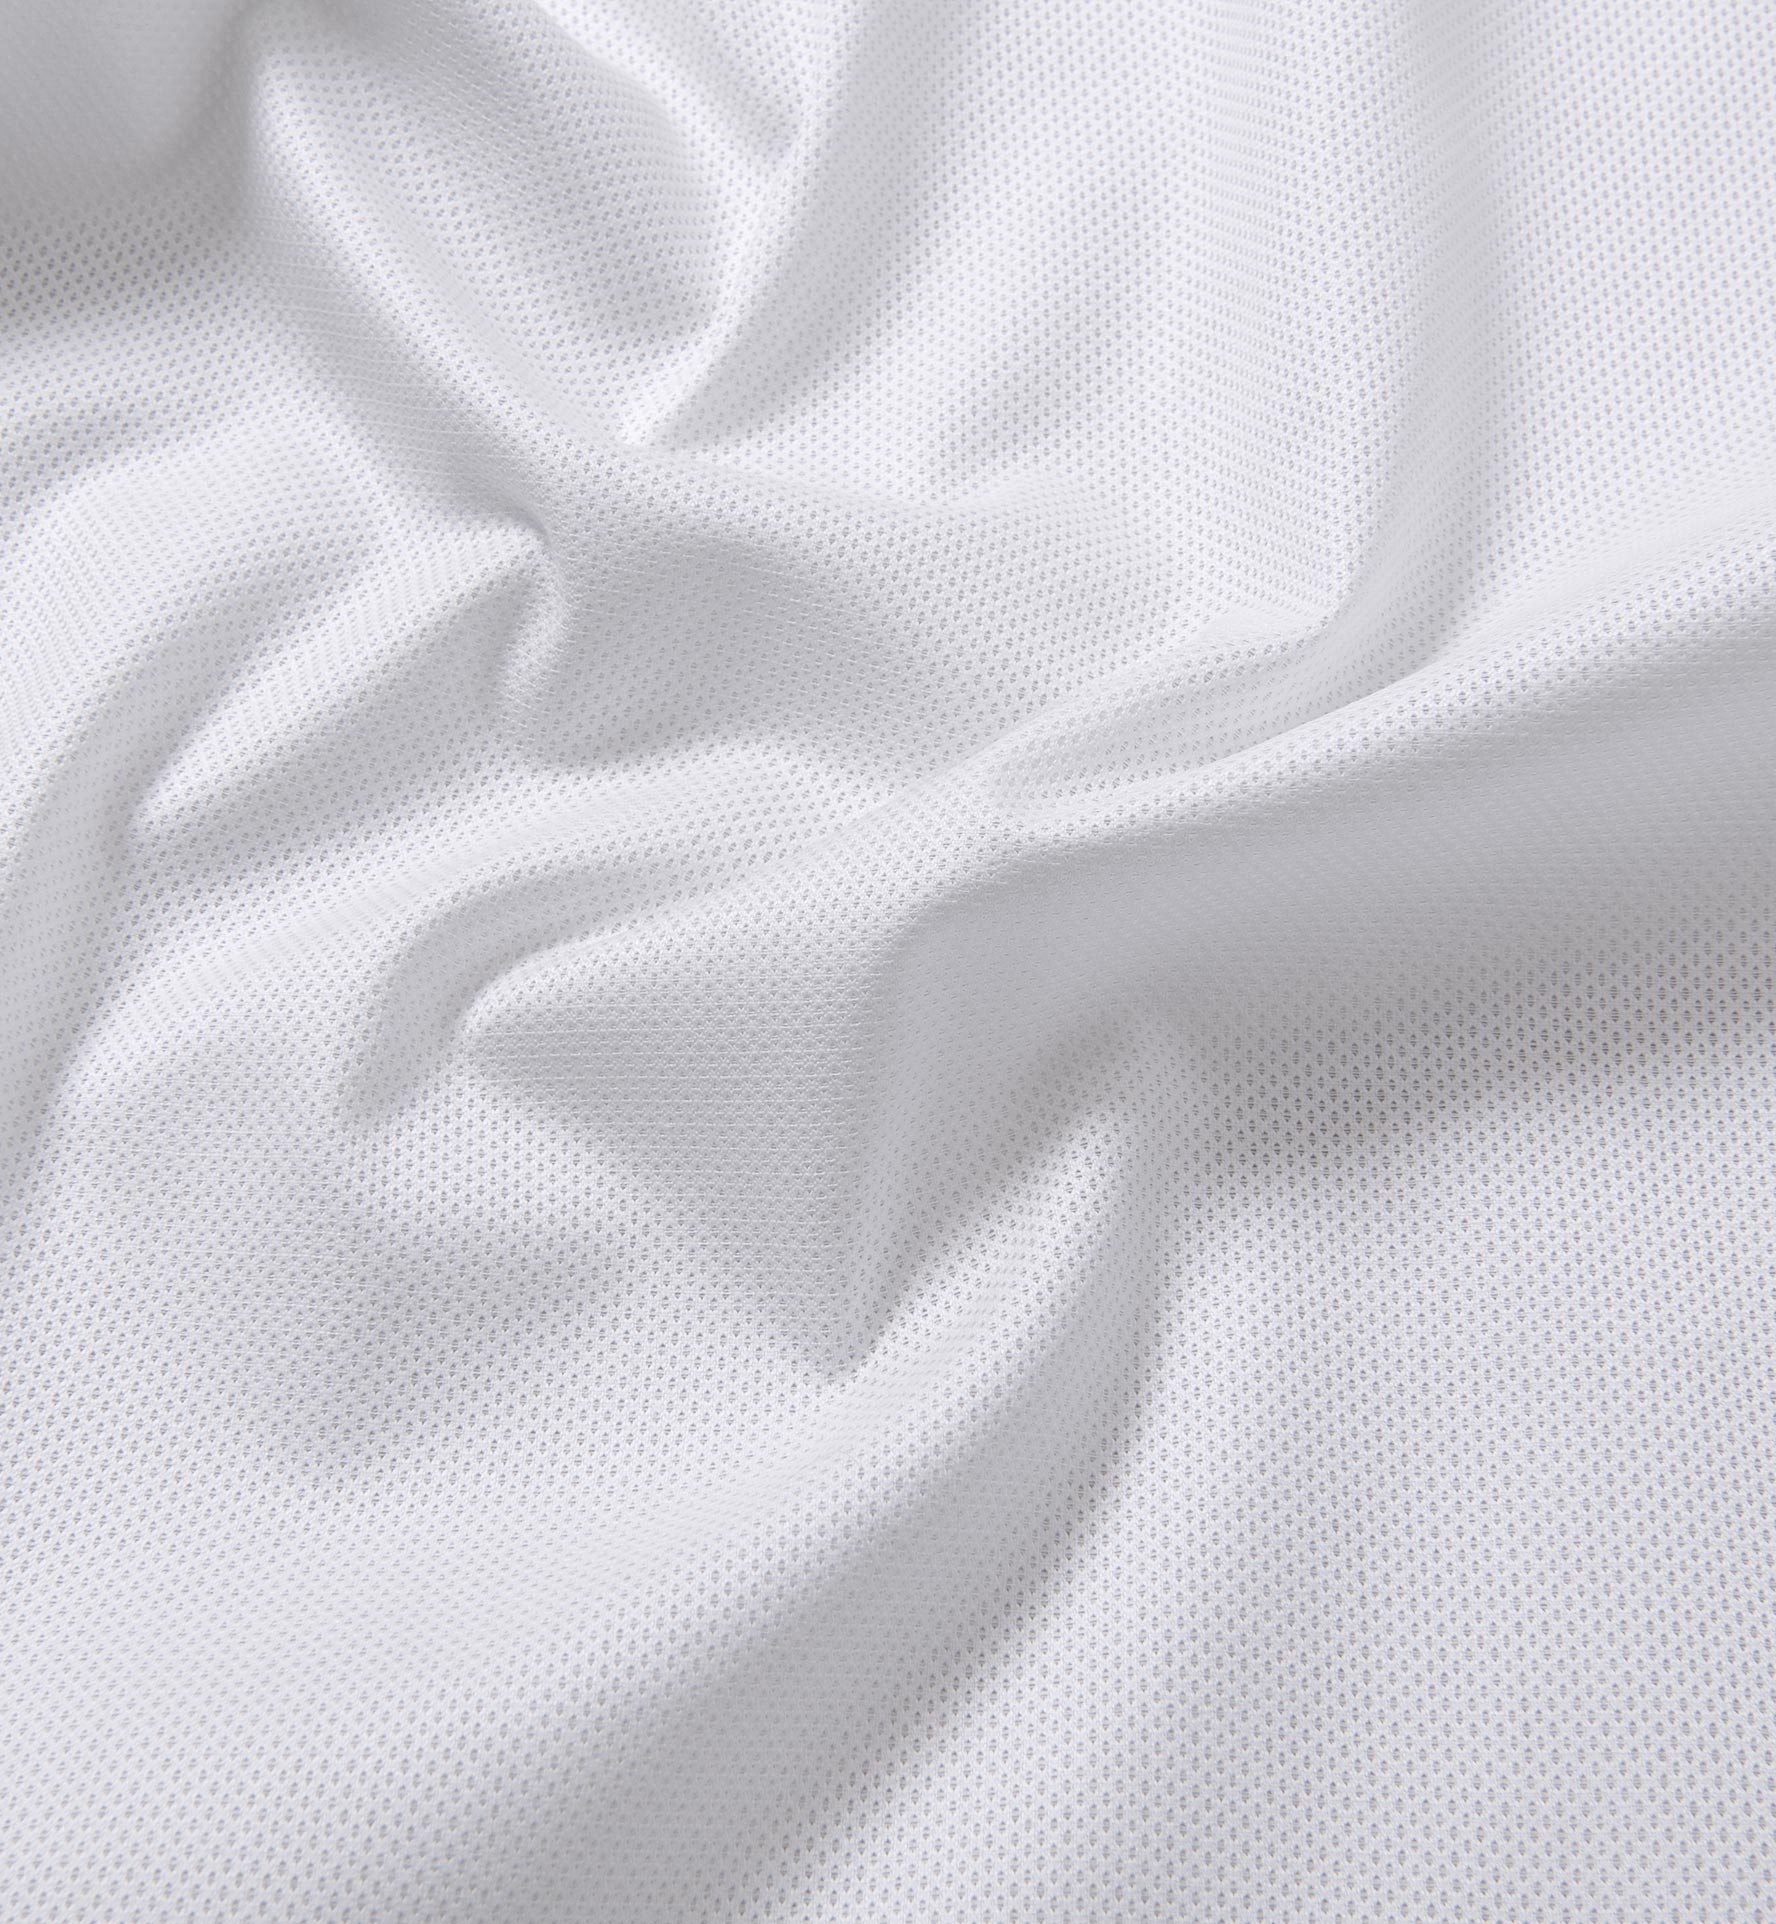 Minetta White Airtex Shirts by Proper Cloth